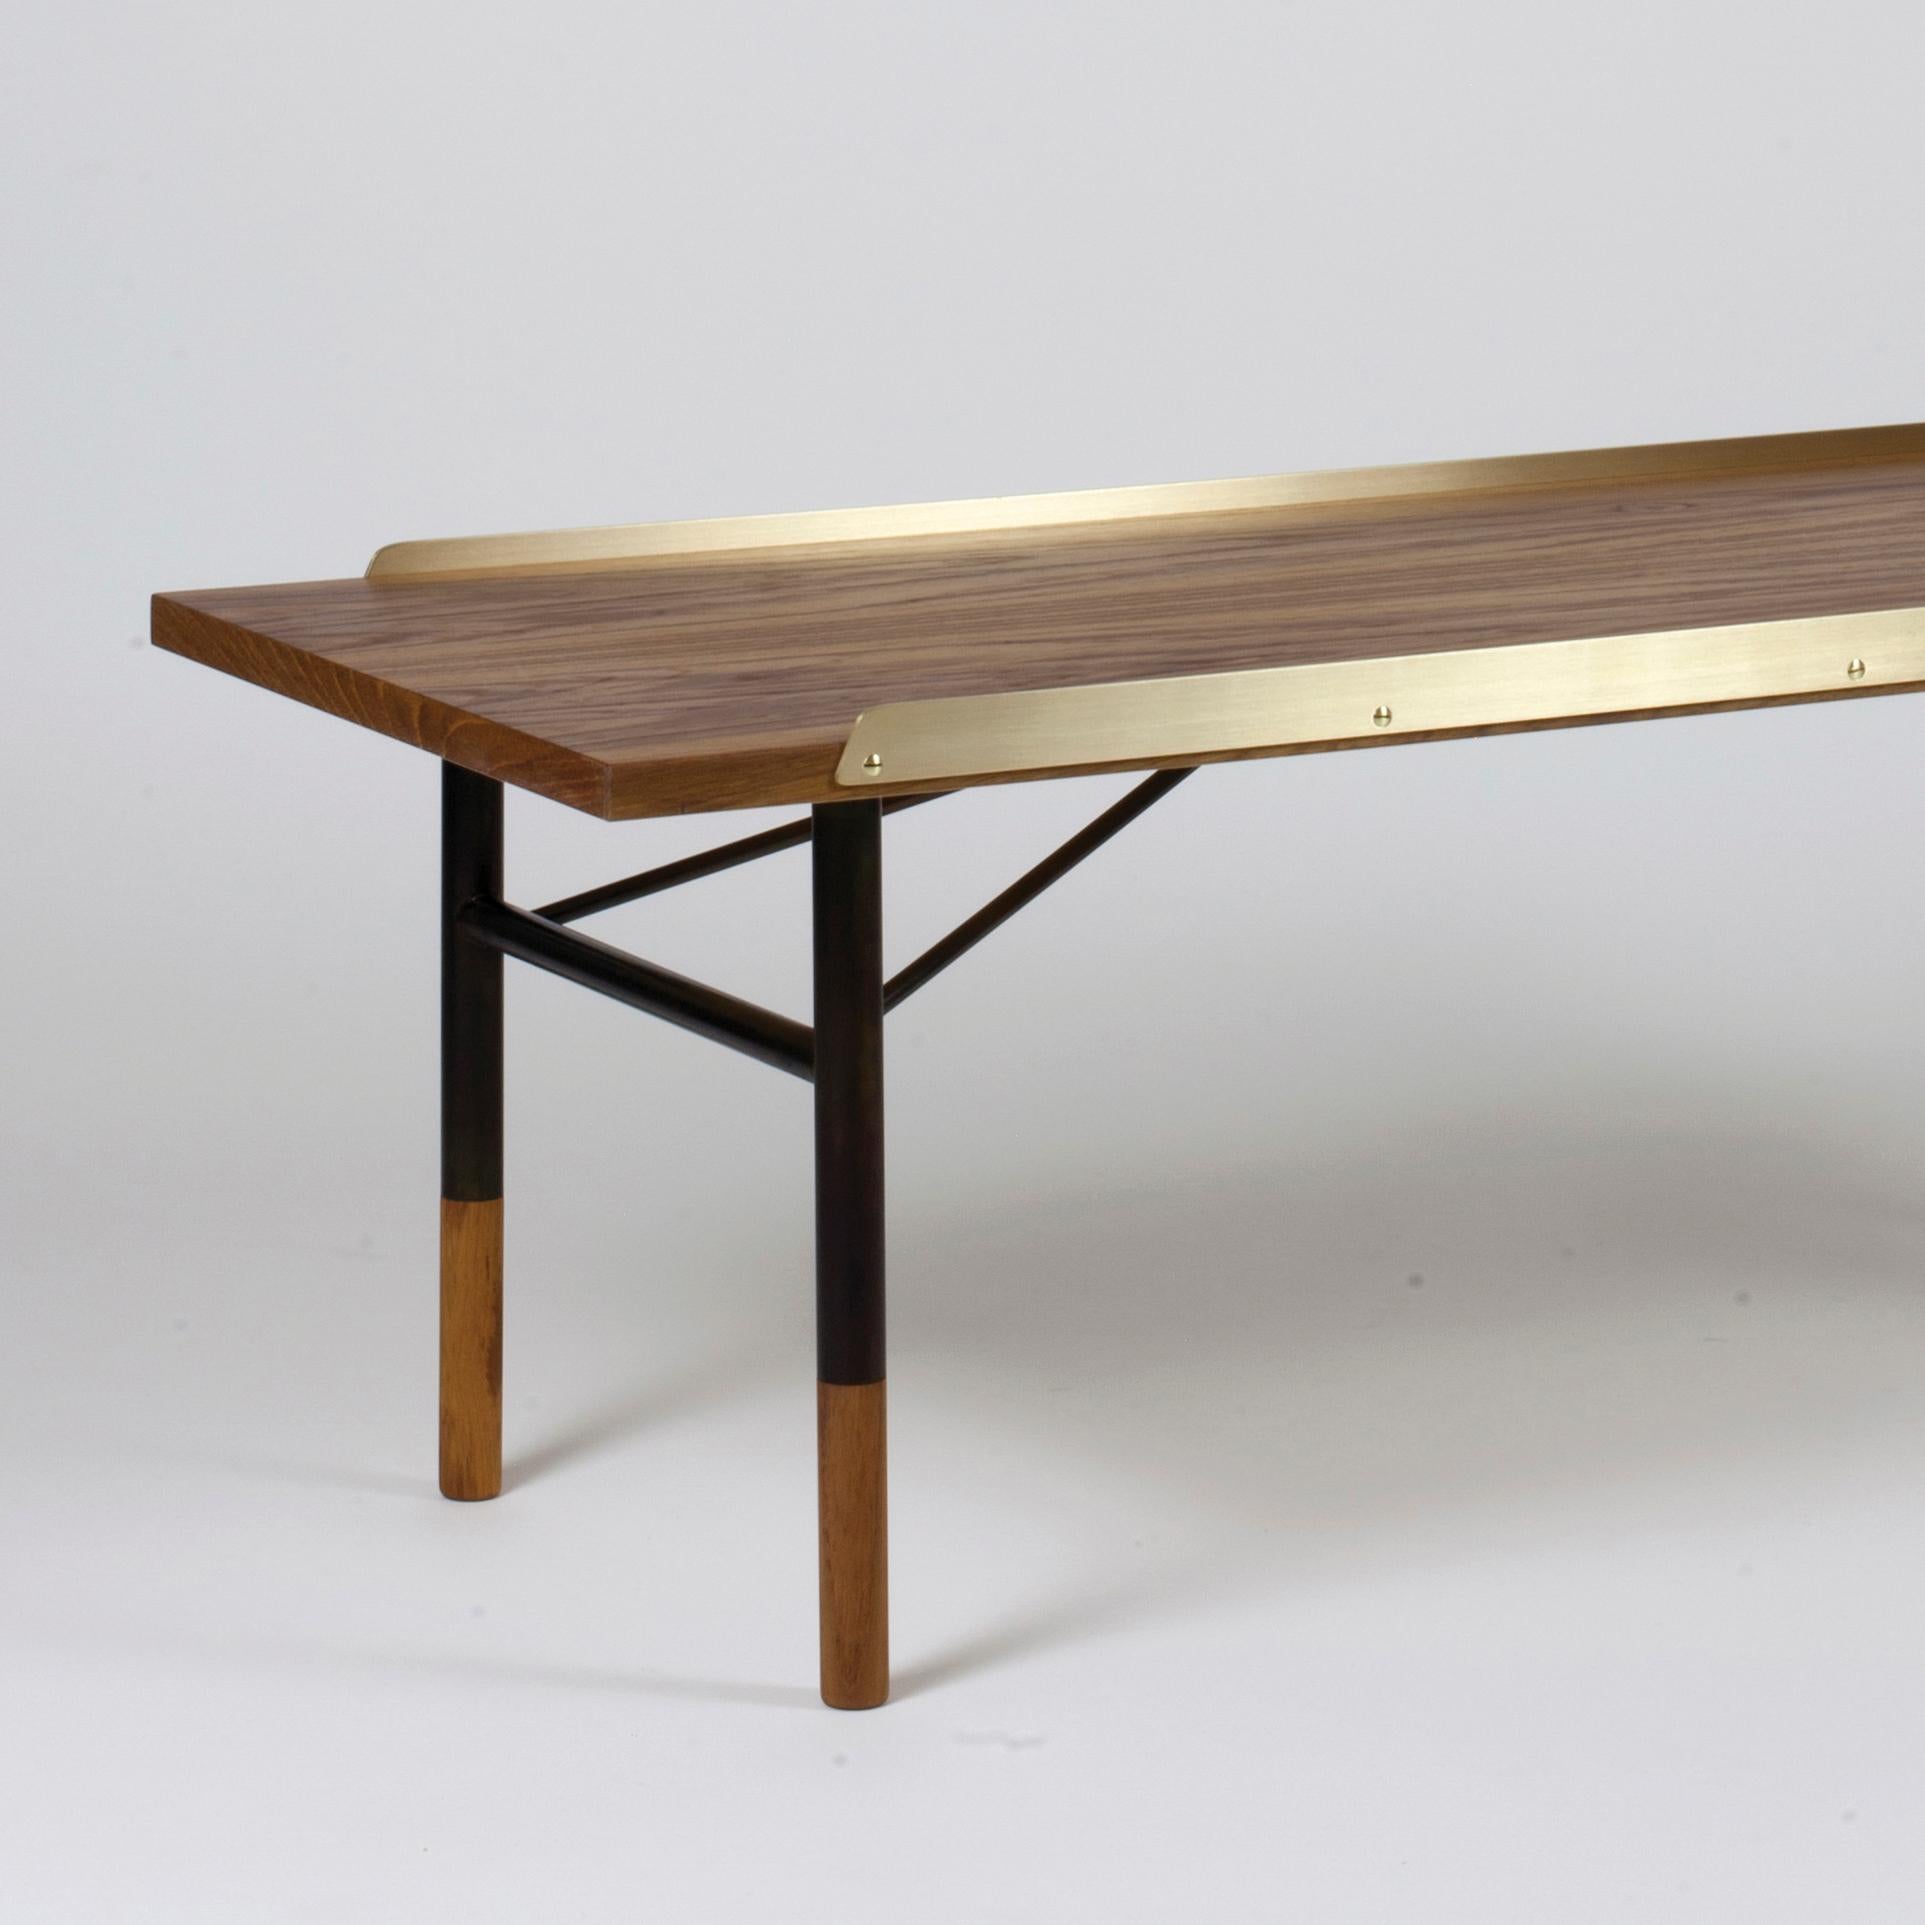 Danish Finn Juhl Table Bench, Wood and Brass